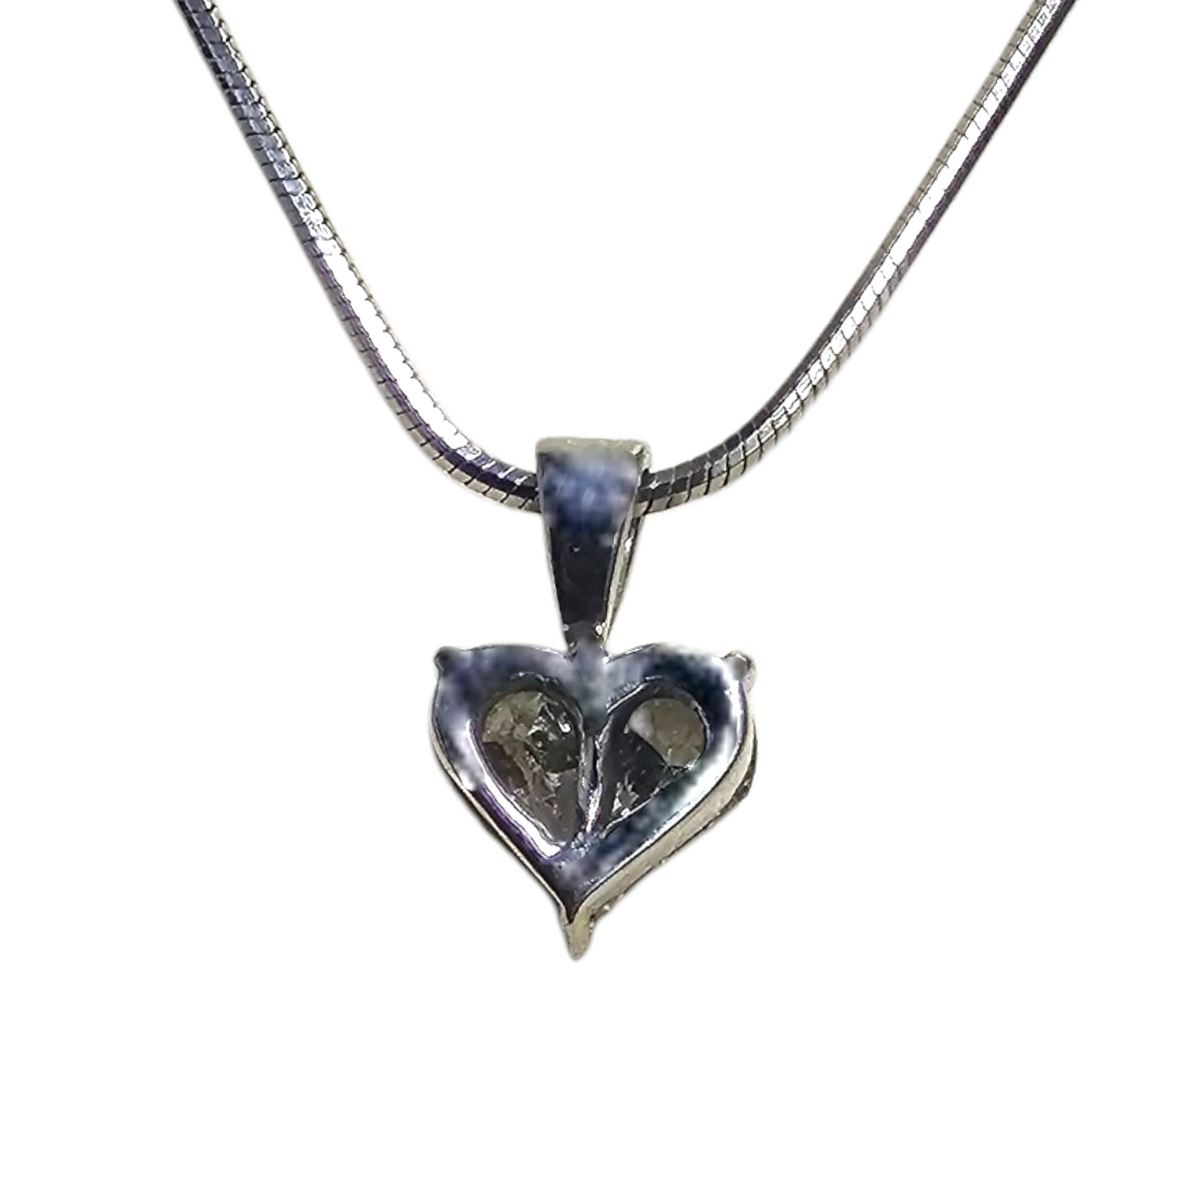 14Kt White Gold Diamond Heart Pendant Necklace